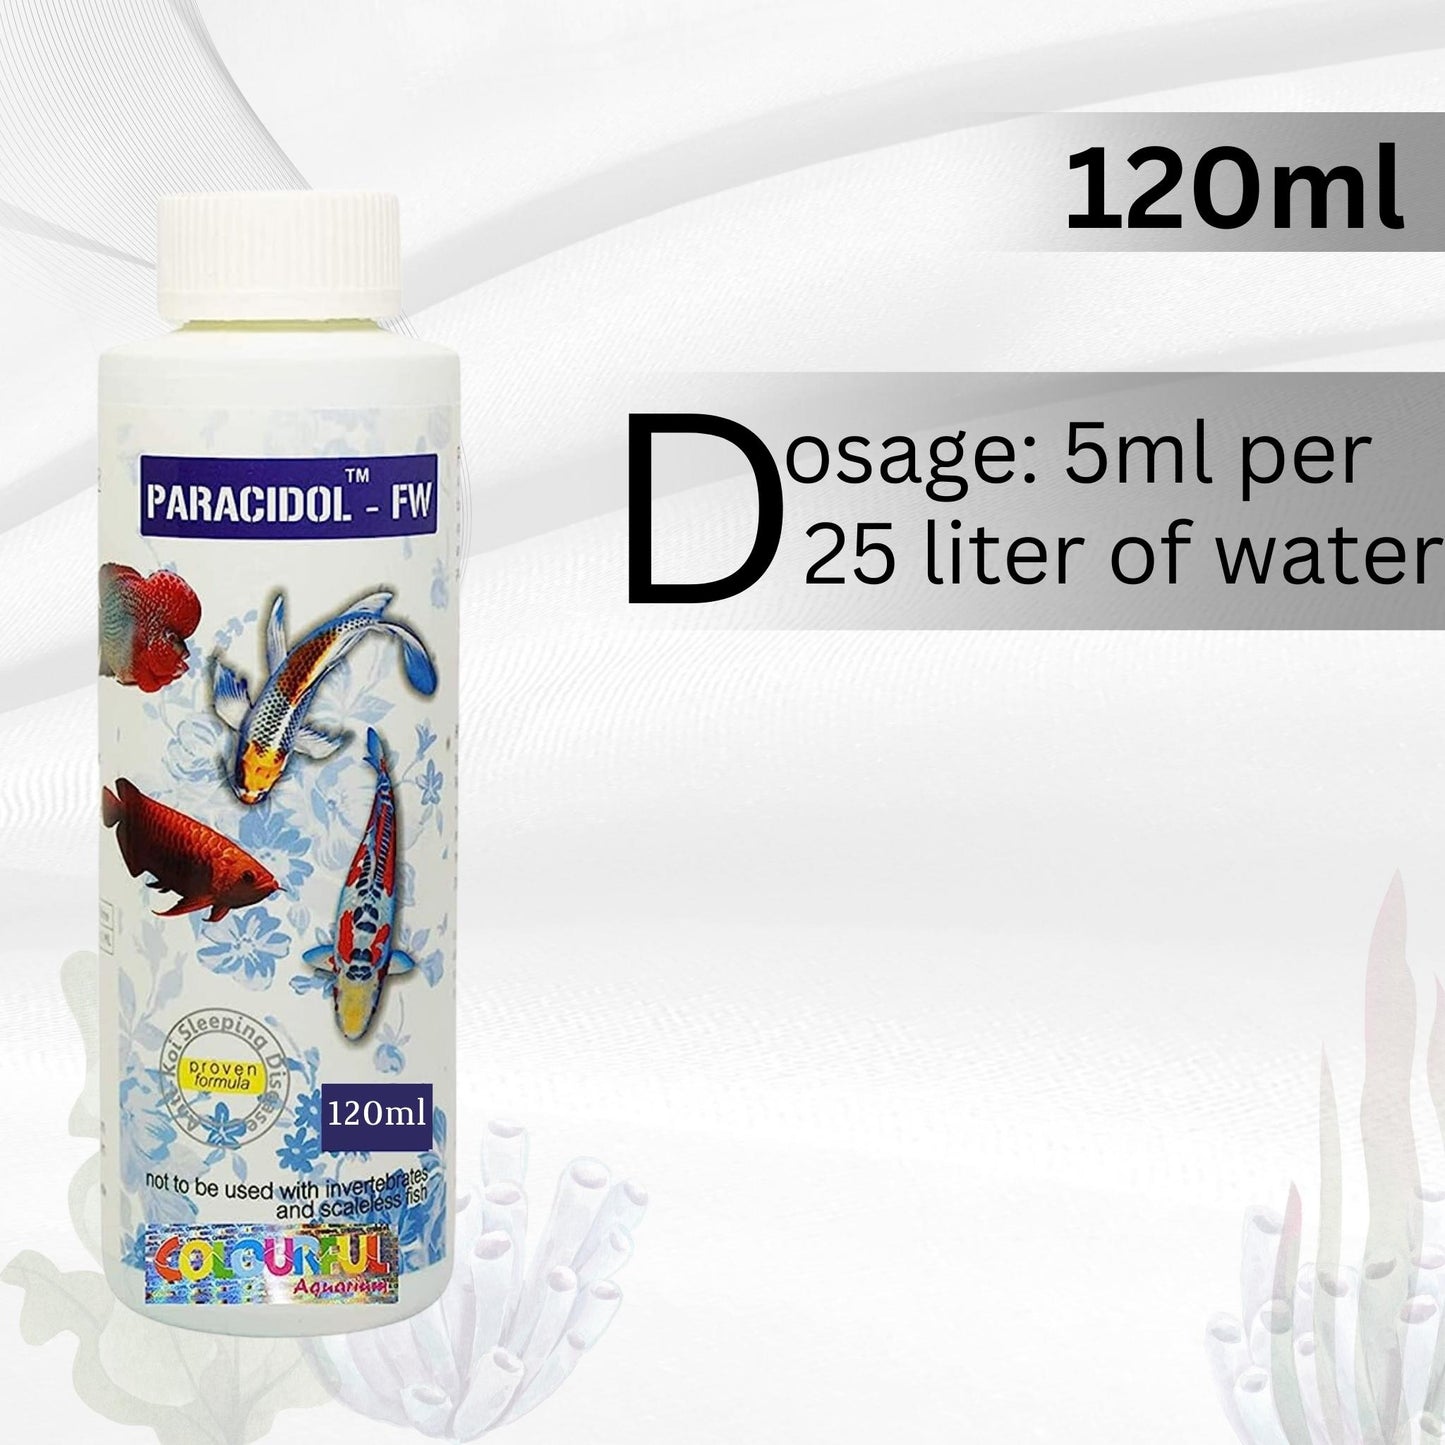 Aquatic Remedies Paracidol Freshwater Medicine - 120ml, Pack of 2